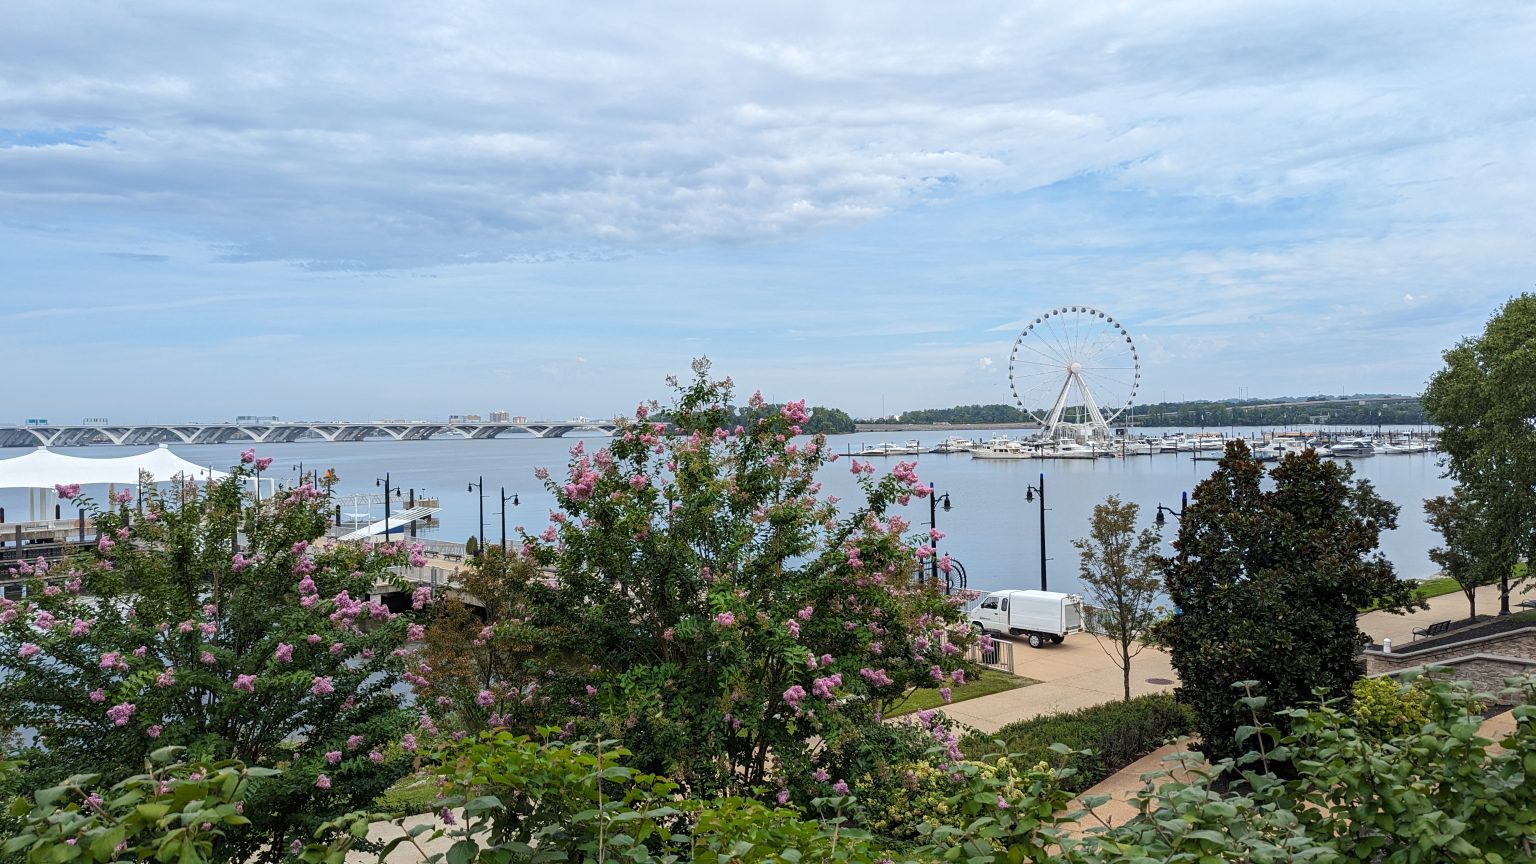 Ferris wheel at National Harbor, MD